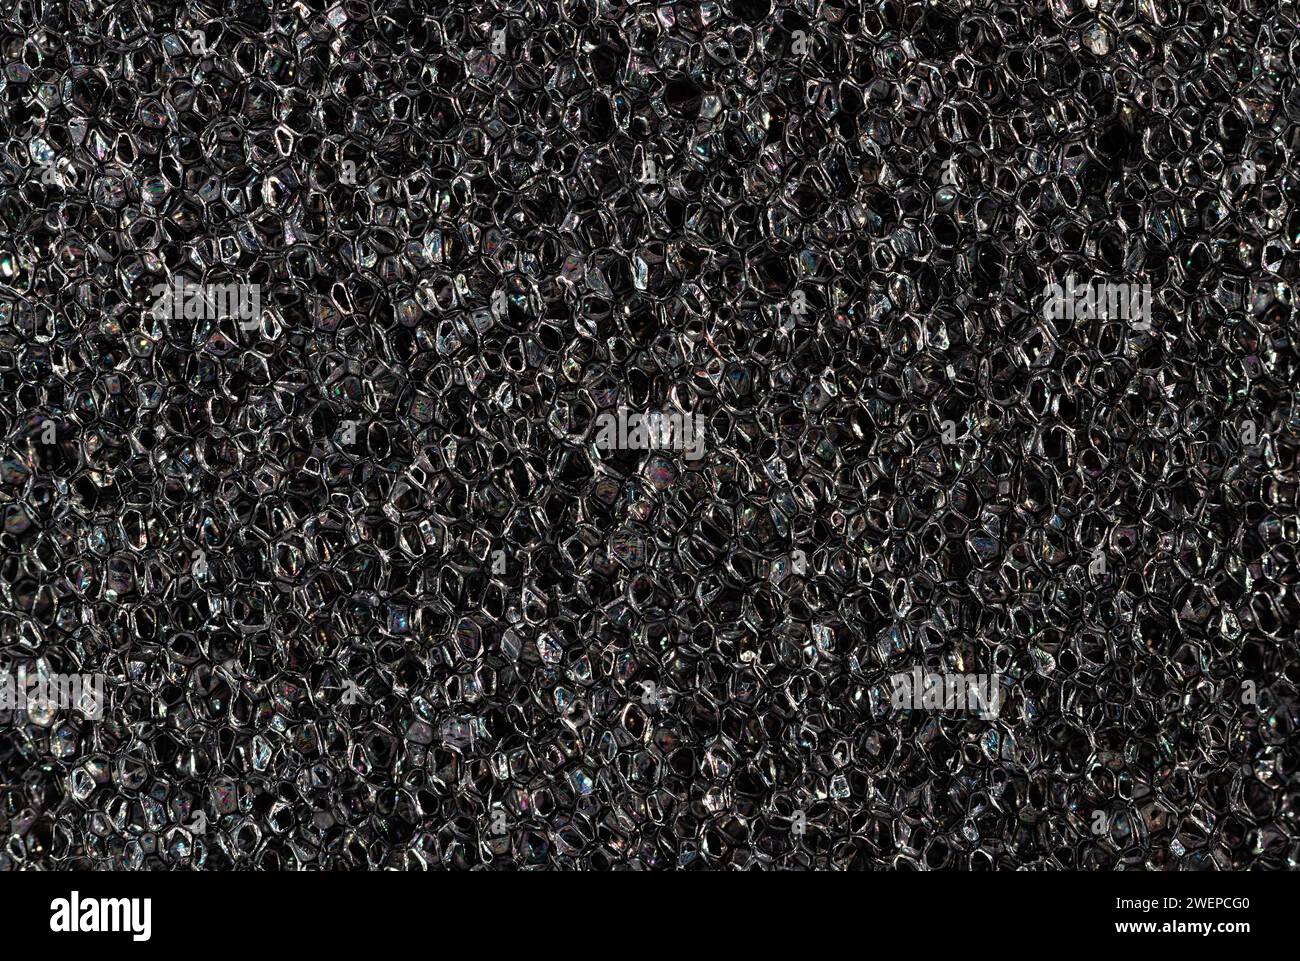 Foam rubber texture close up. High quality macro texture of dark grey foam rubber sponge. Stock Photo